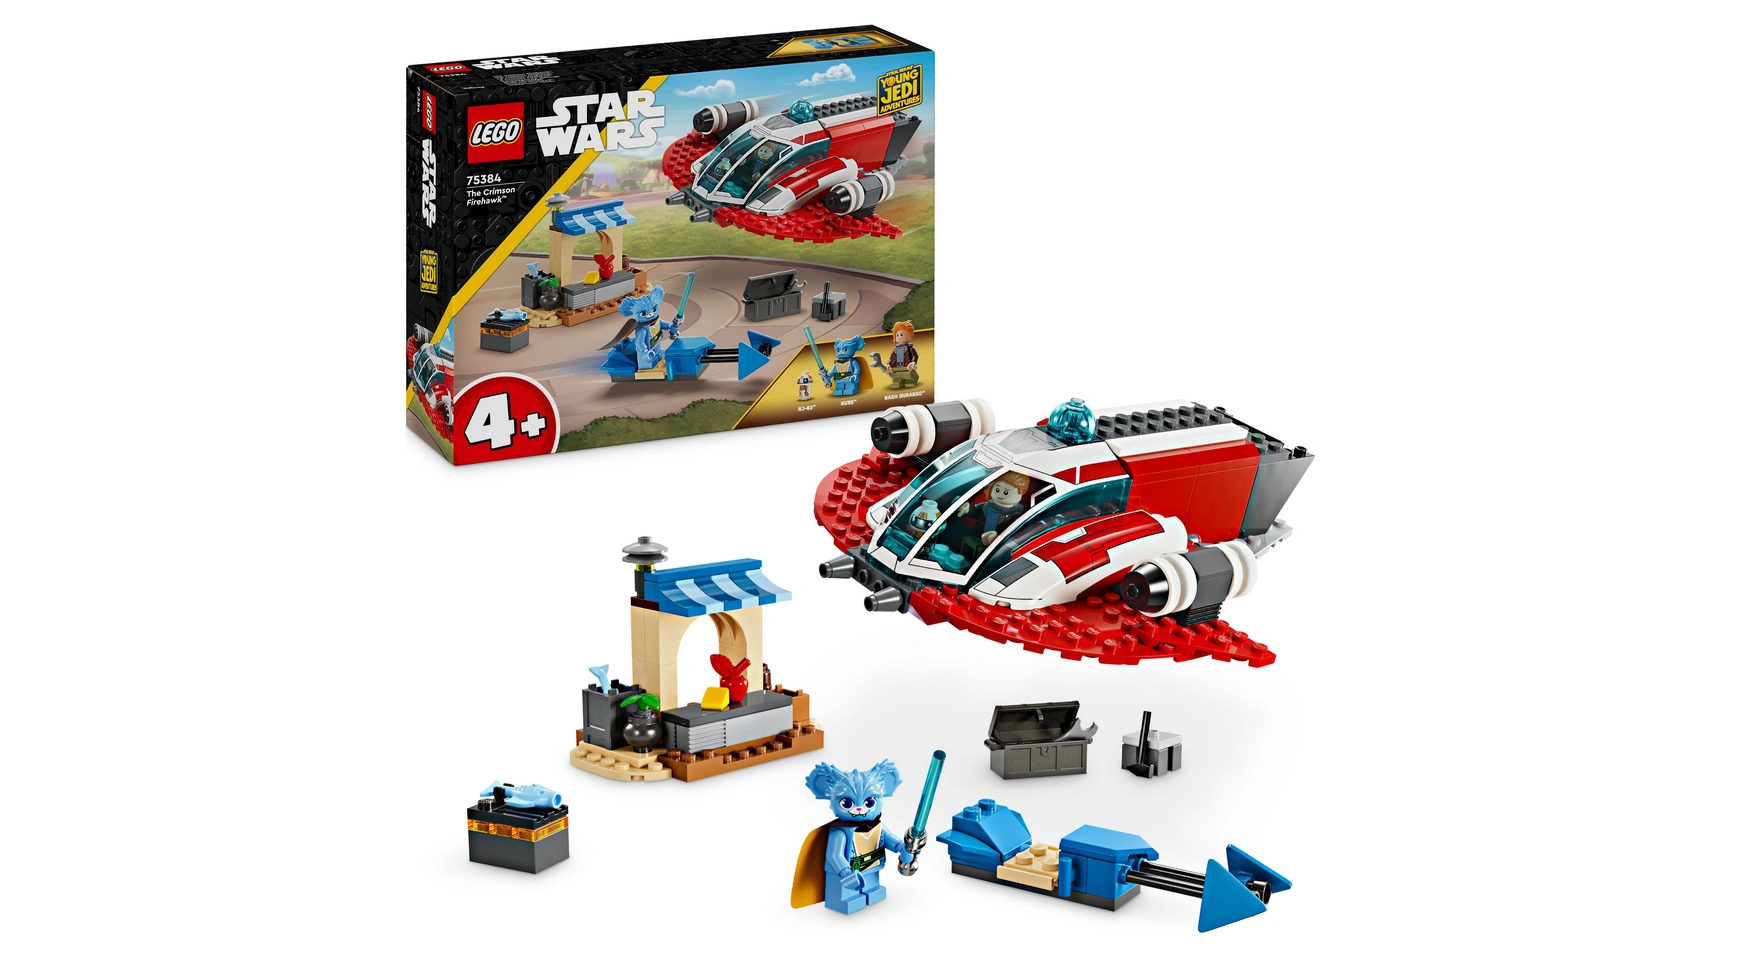 Lego Star Wars: Young Jedi Adventures Набор Багровый огнеястреб конструктор лезвие бритвы 75292 lego star wars